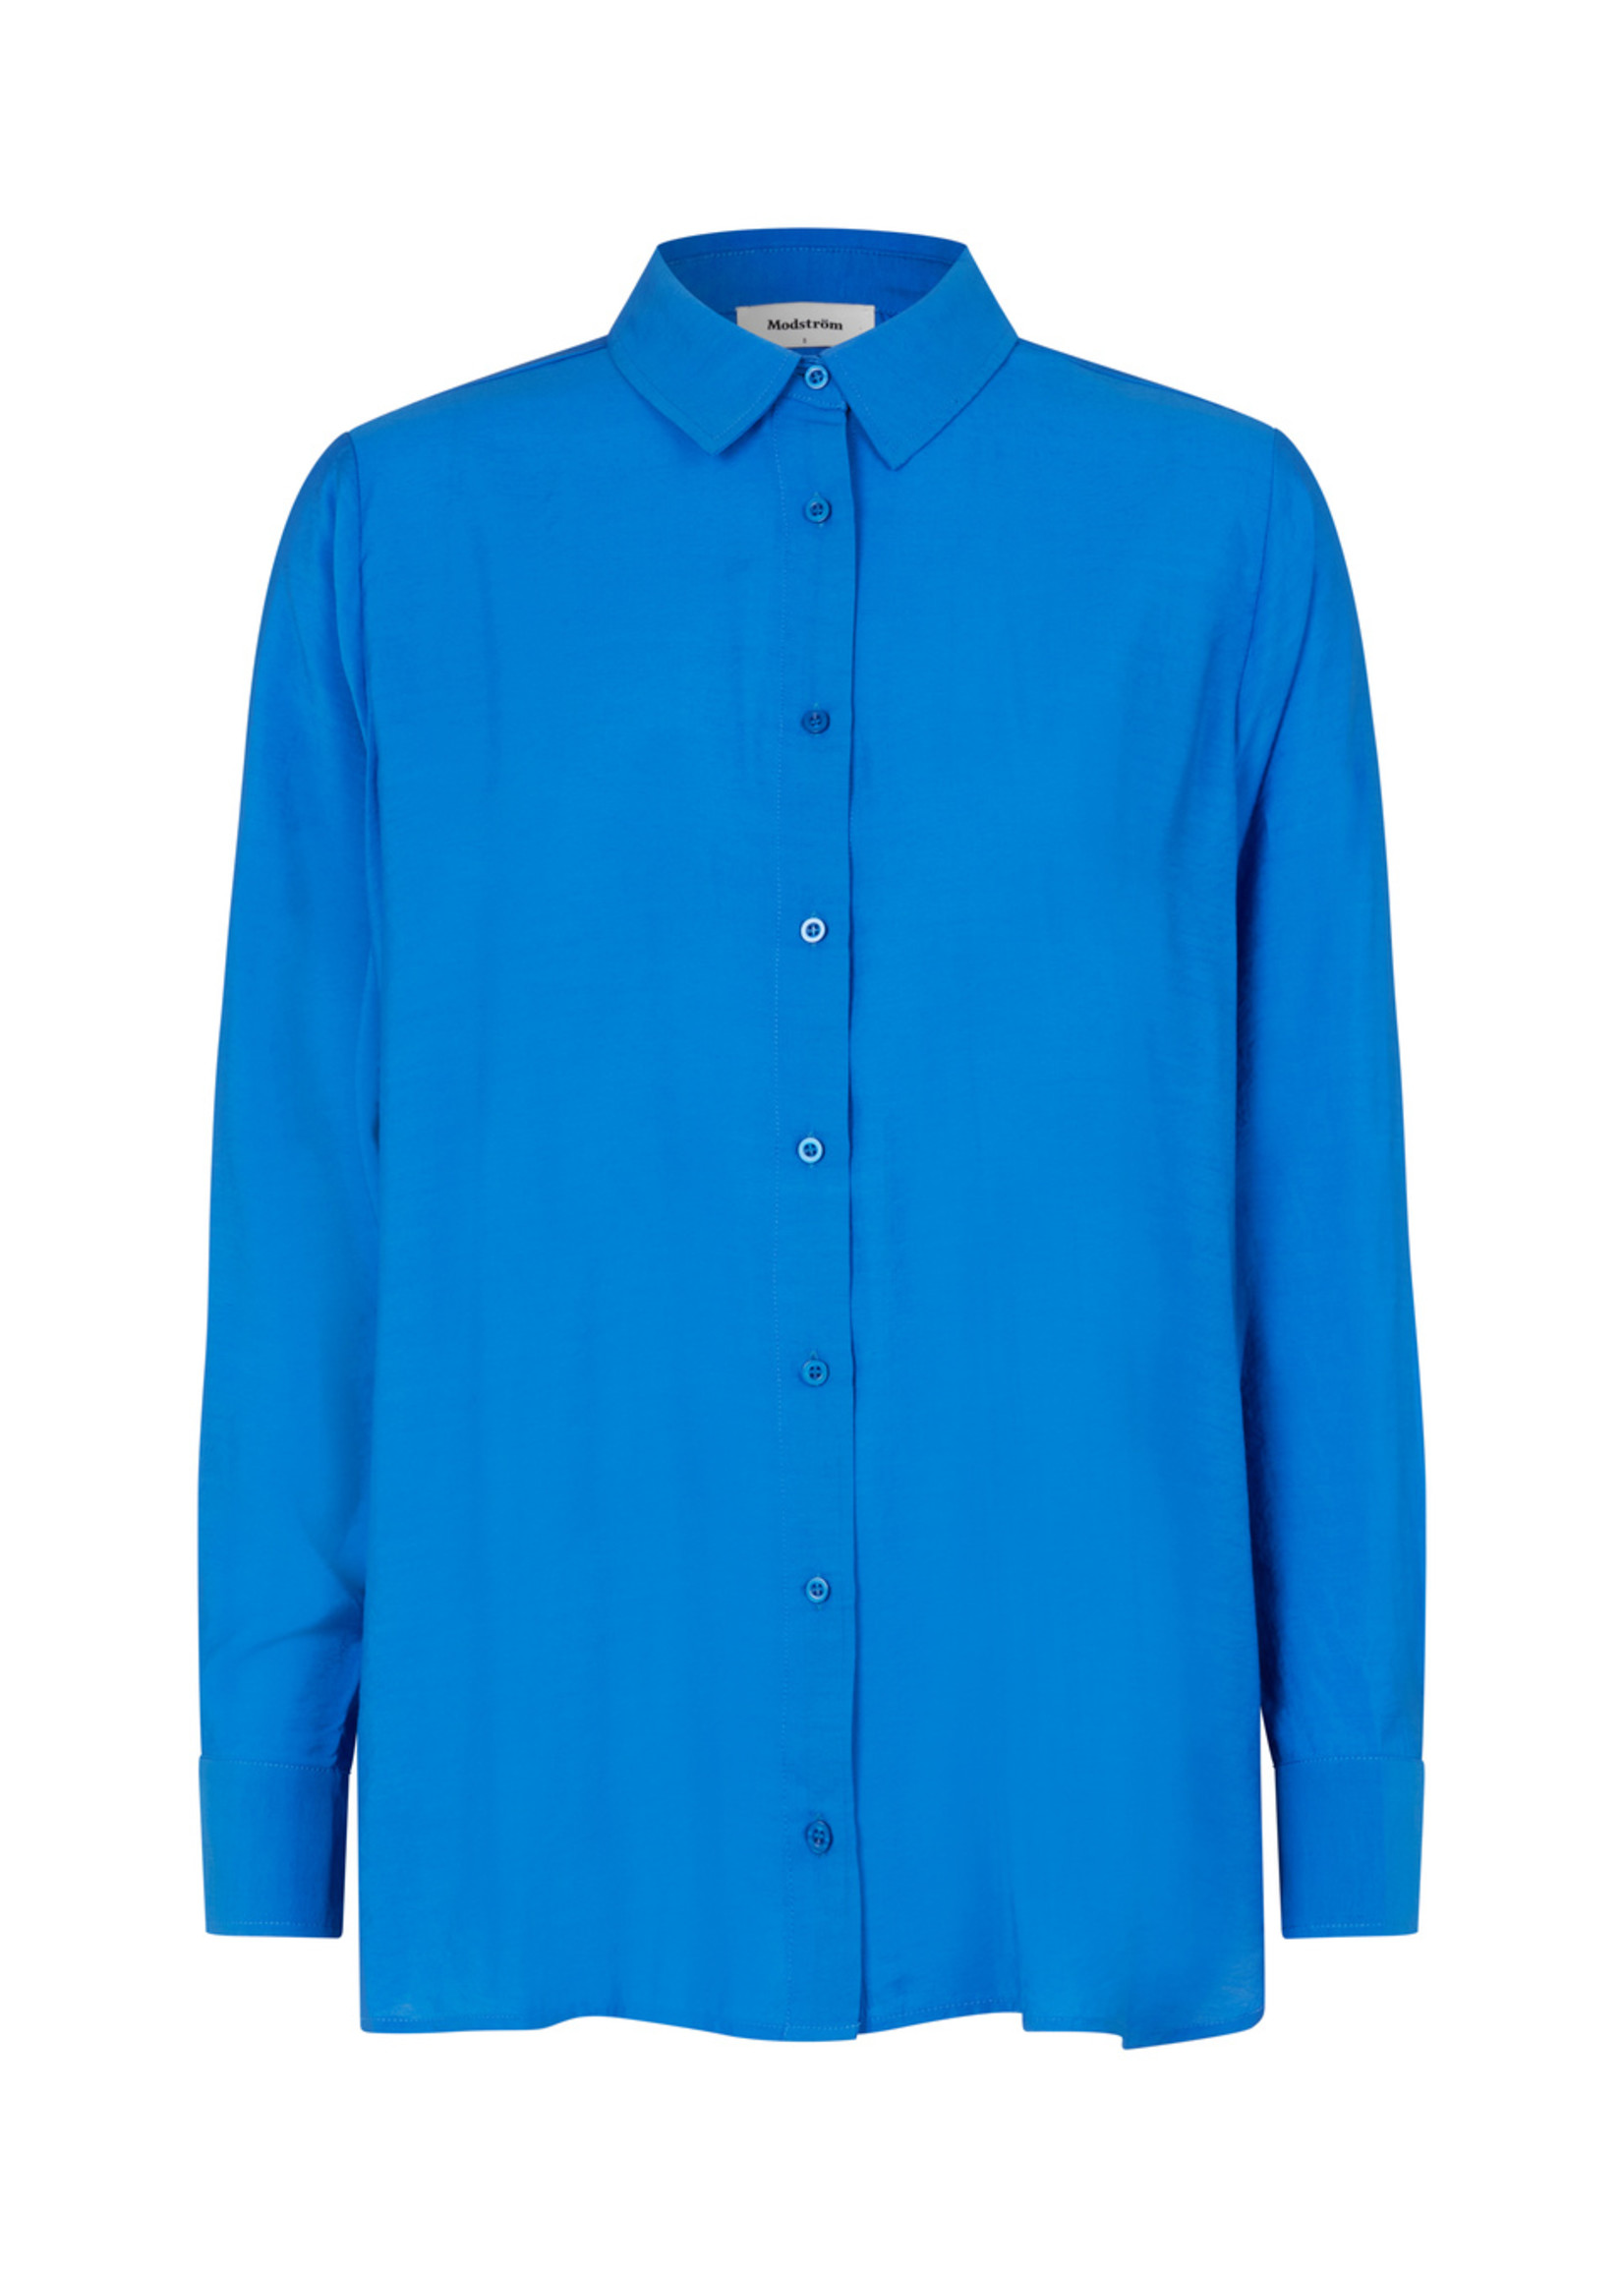 Modstrom Christopher Shirt Azure Blue